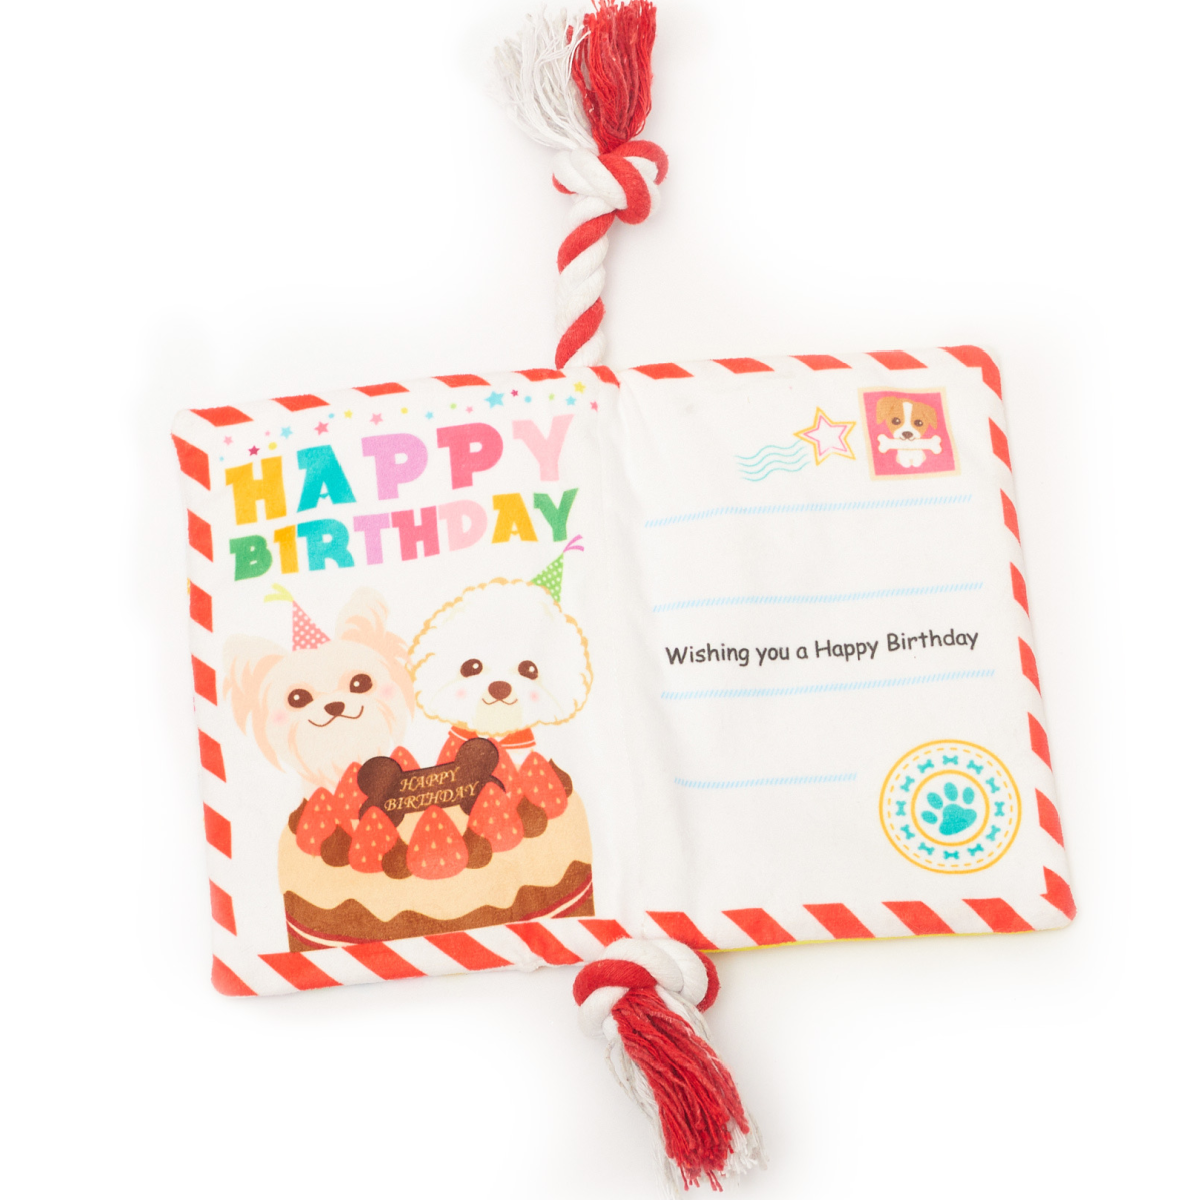 Happy birthday card toy